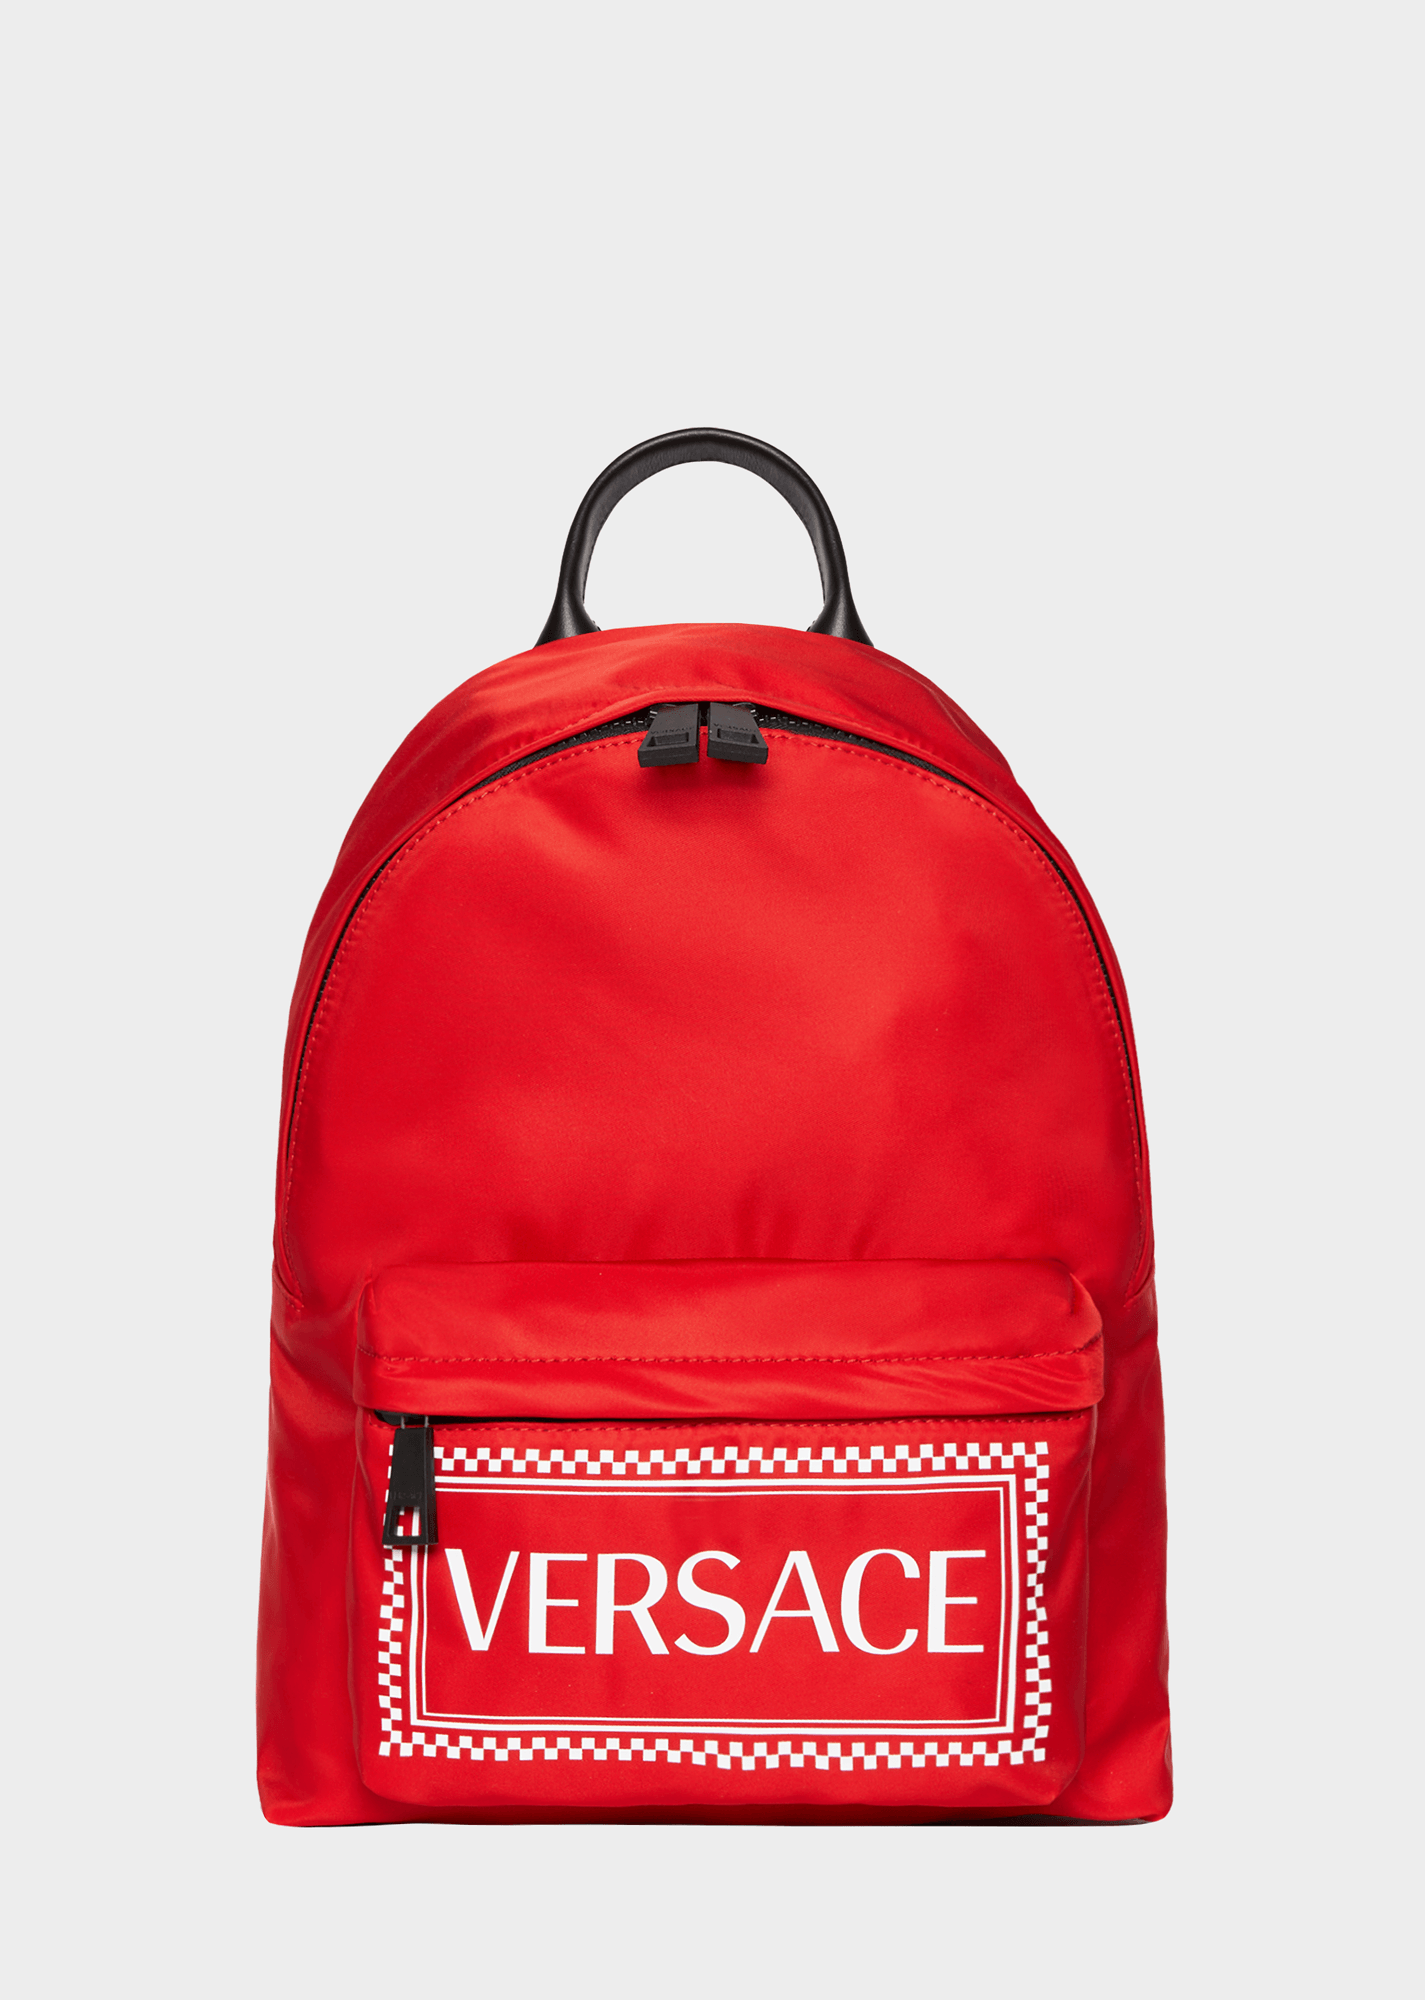 Two Red Women Logo - Versace 90s Vintage Logo Backpack for Women. UK Online Store